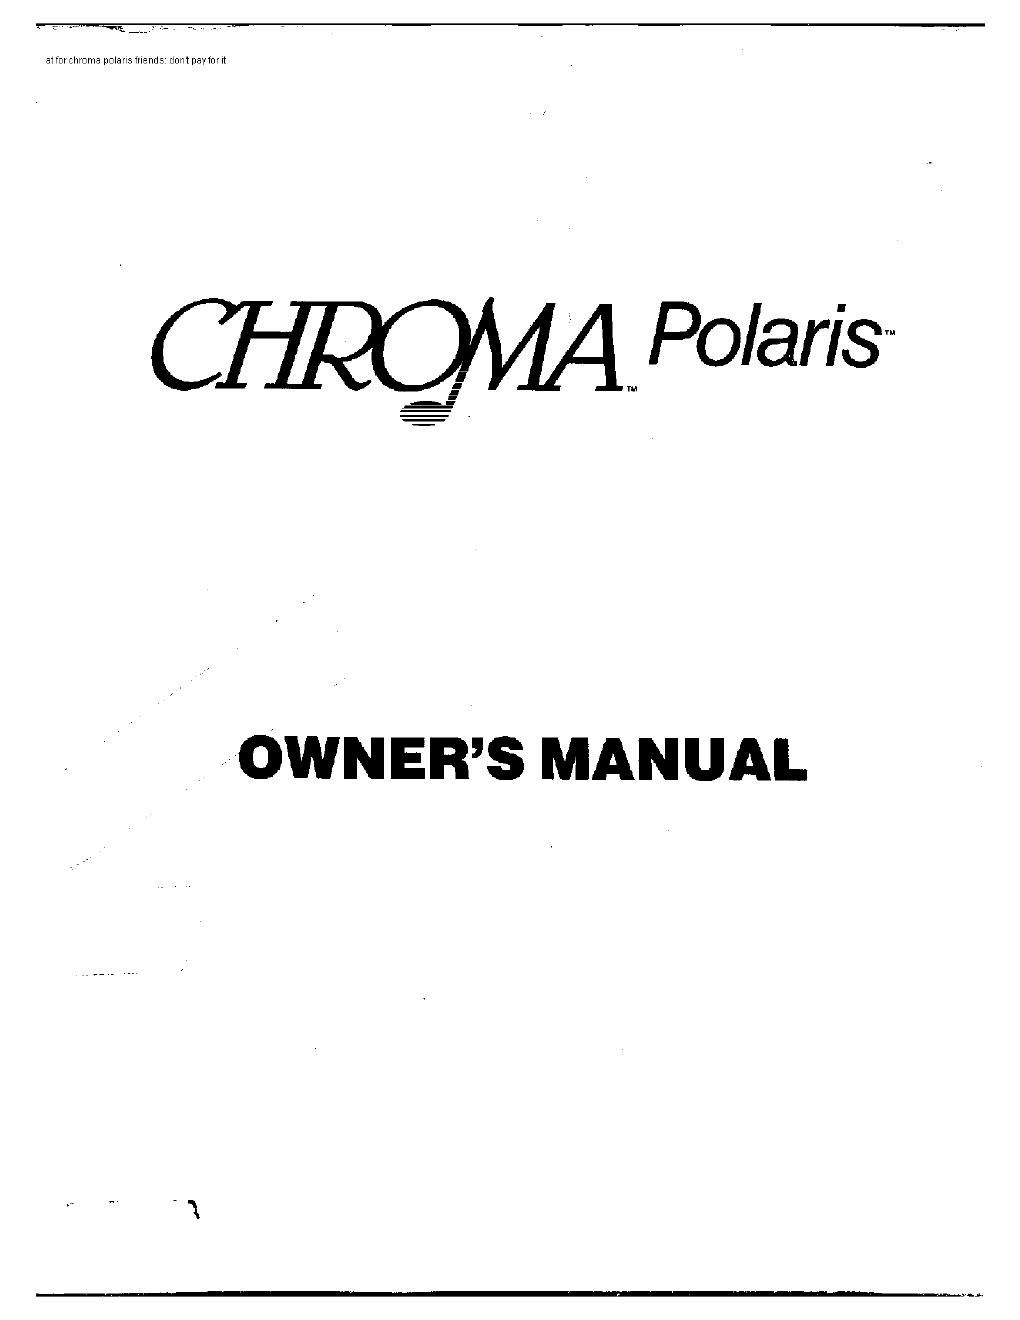 fender chroma polaris owners manual